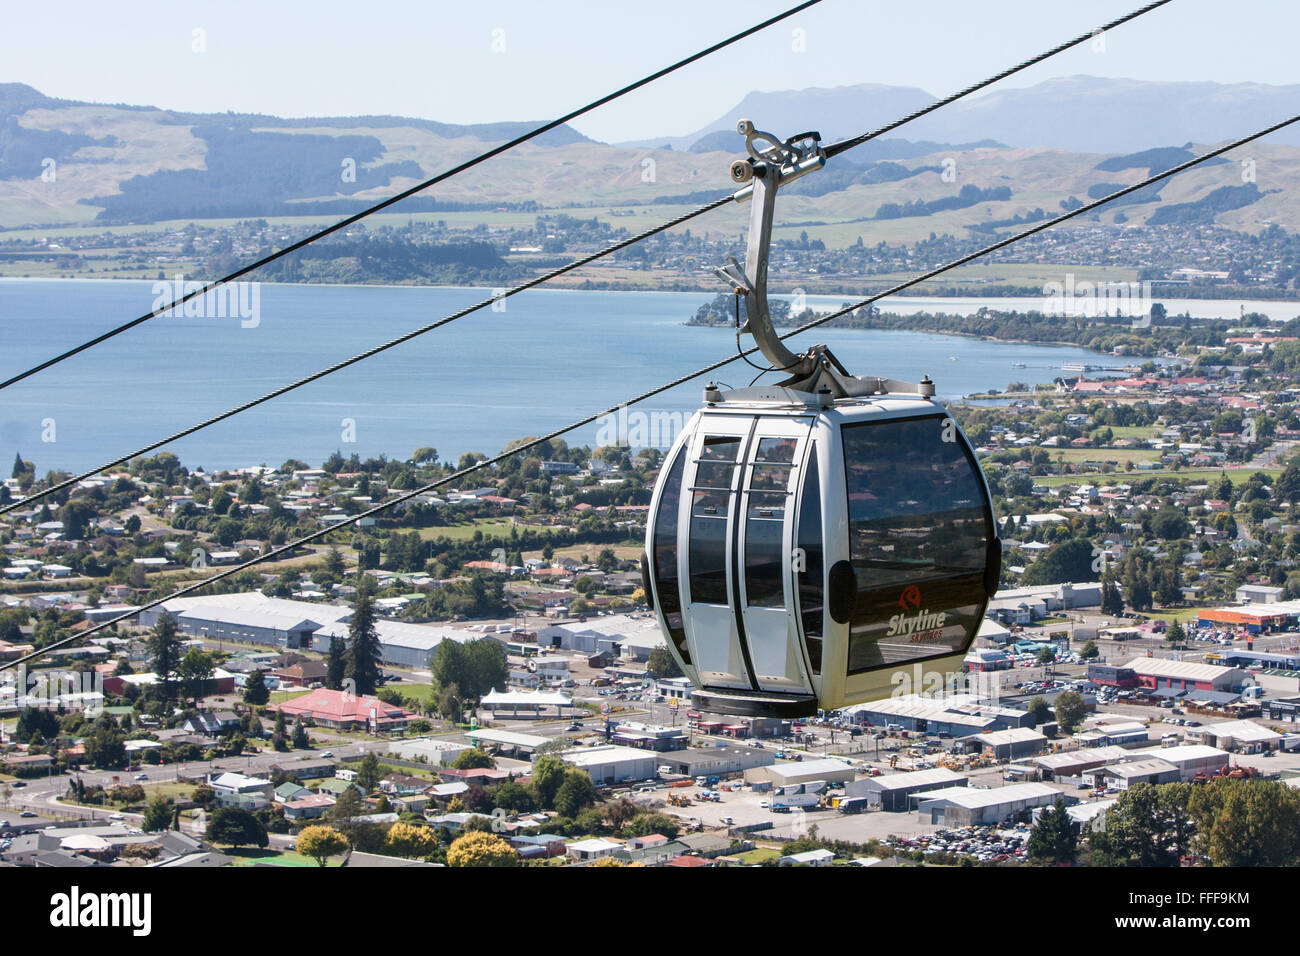 Skyline Gondola cable car cableway ride to peak at Rotorua,with views of Rotorua Lake and town,North Island,New Zealand. Stock Photo